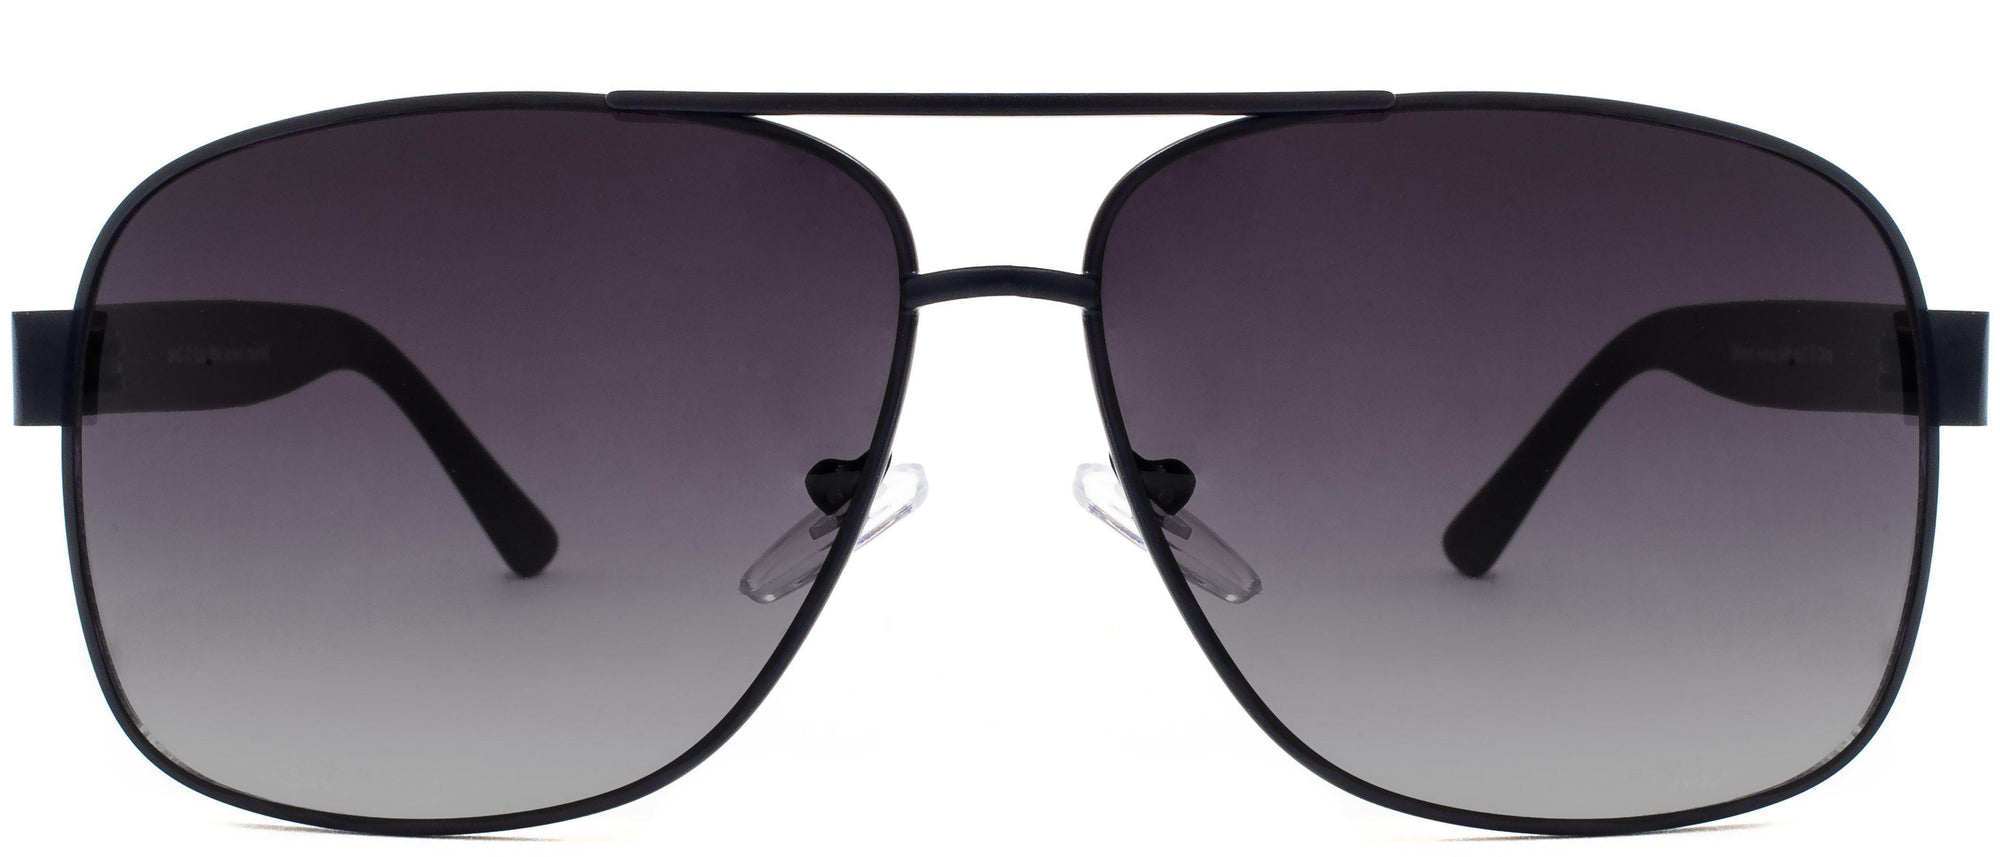 Belmont Avenue - Sunglasses NYS Collection Eyewear Black/Smoke